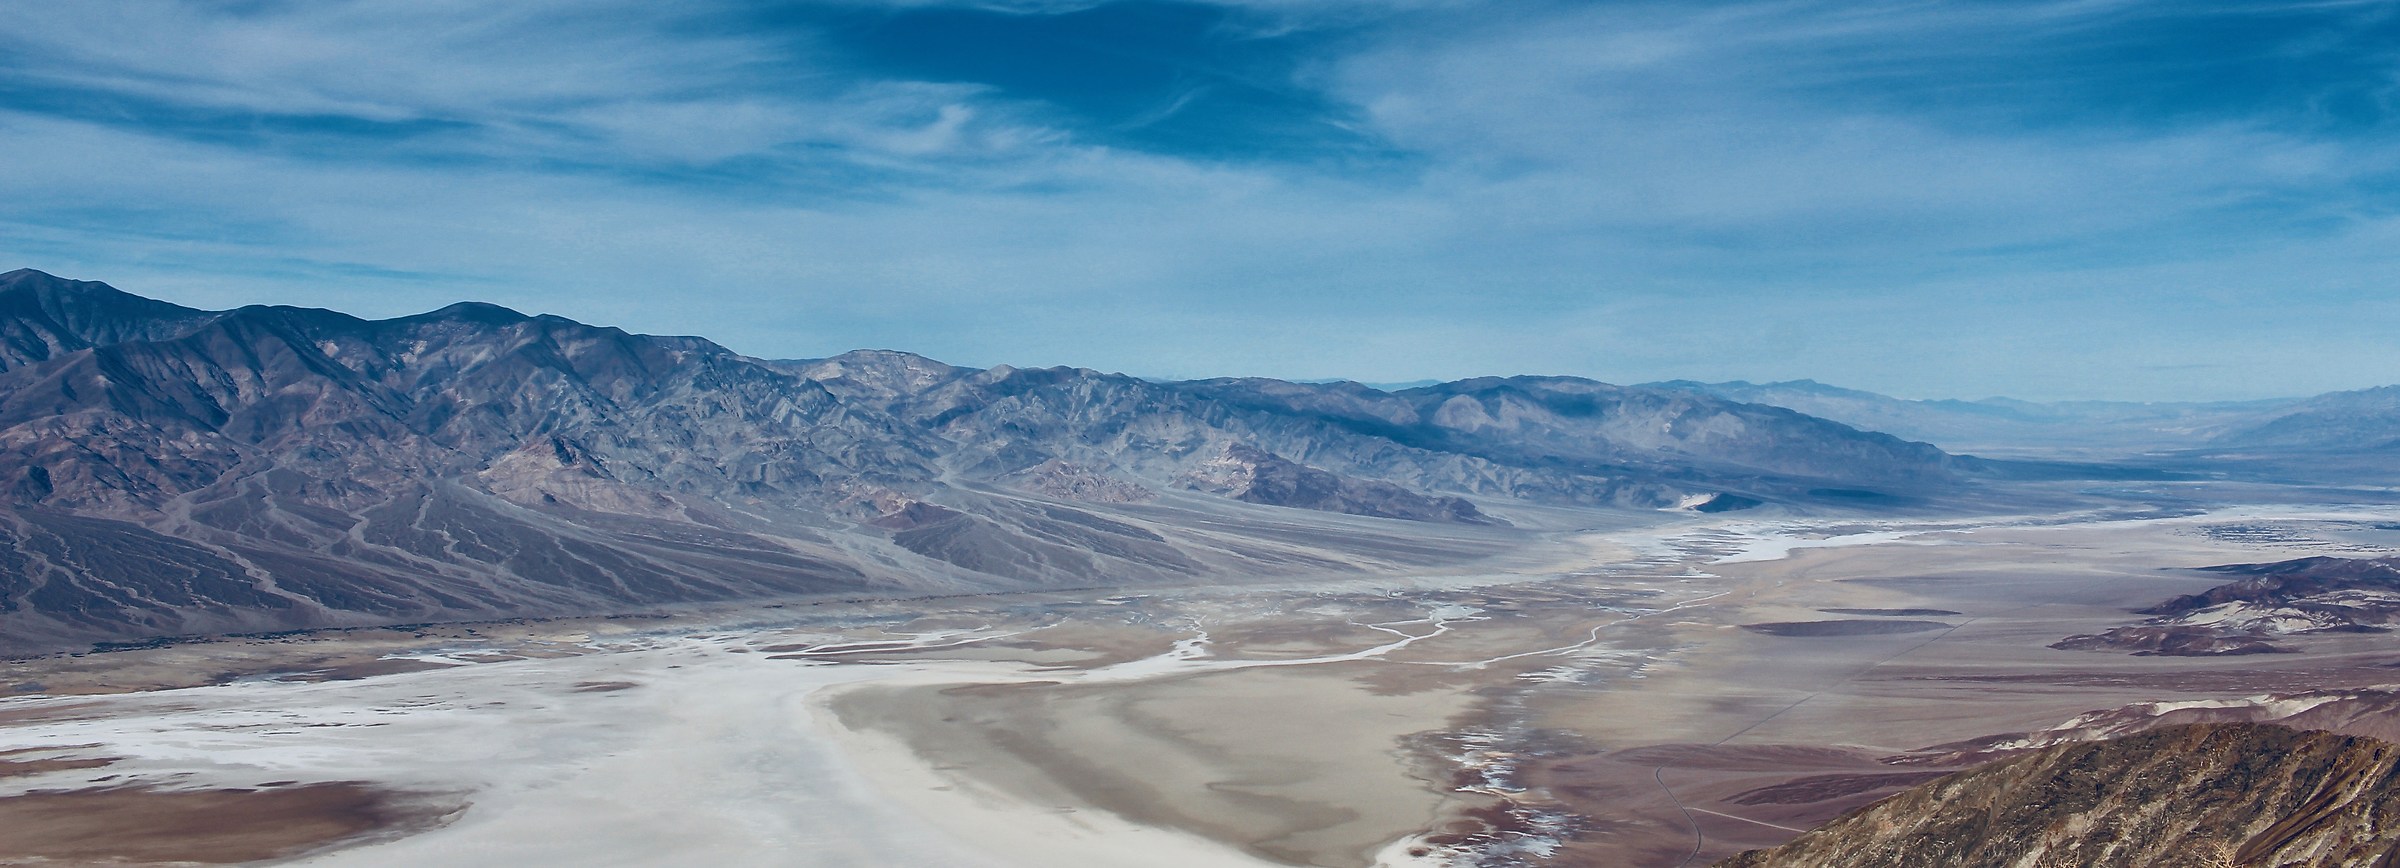 Death Valley - Dante's View...